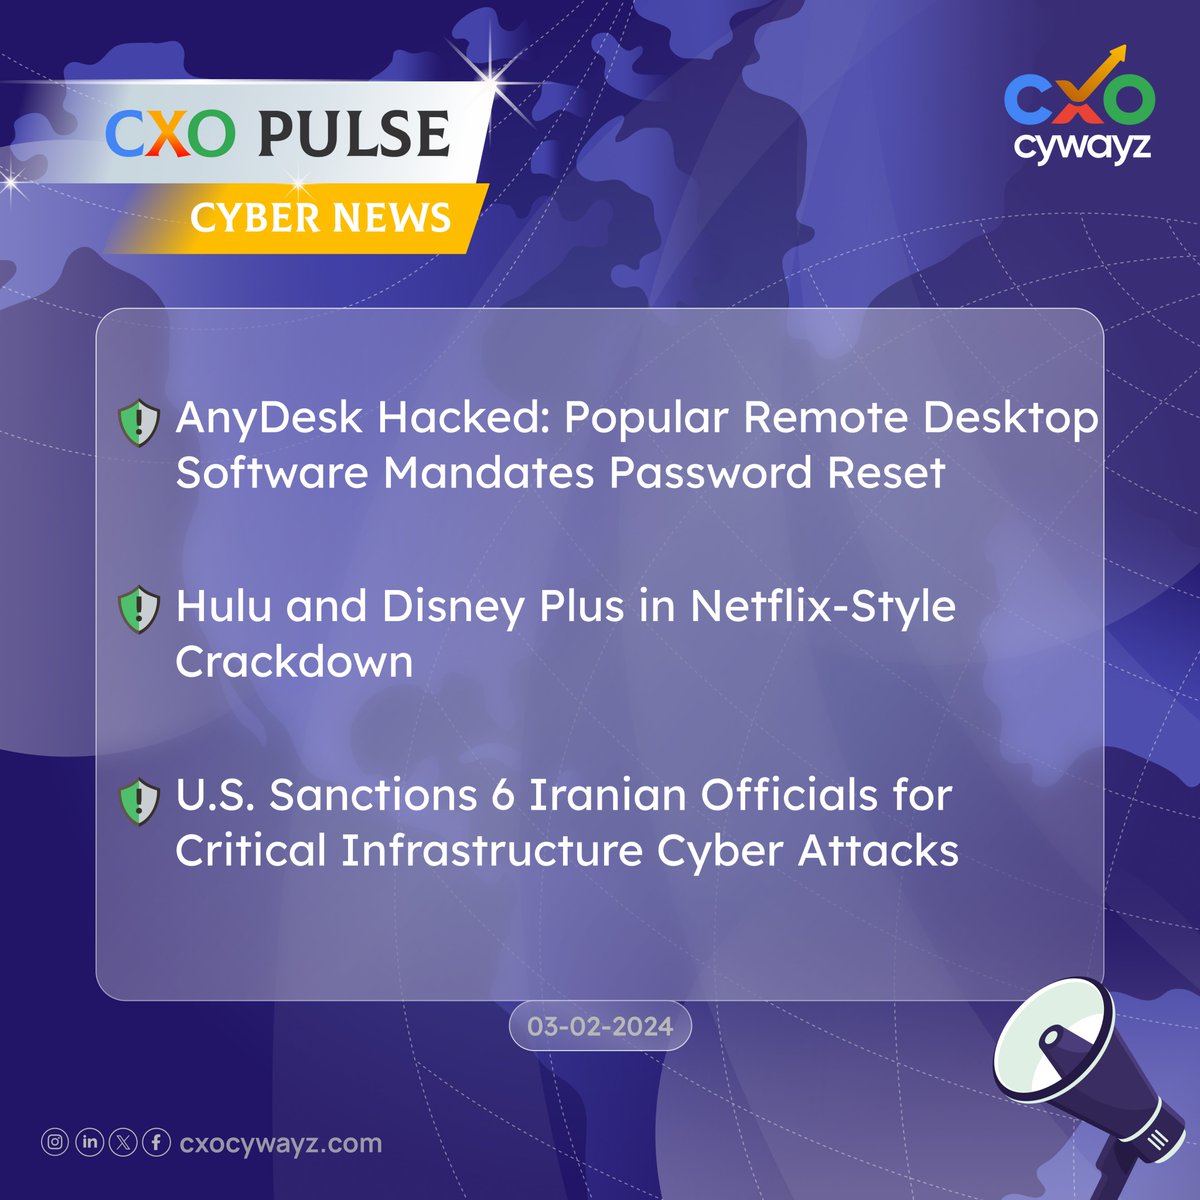 CXO PULSE Cyber News Headlines🚨

#cxocywayz #cxopulse #AnyDesk #USA #Iran #Hulu